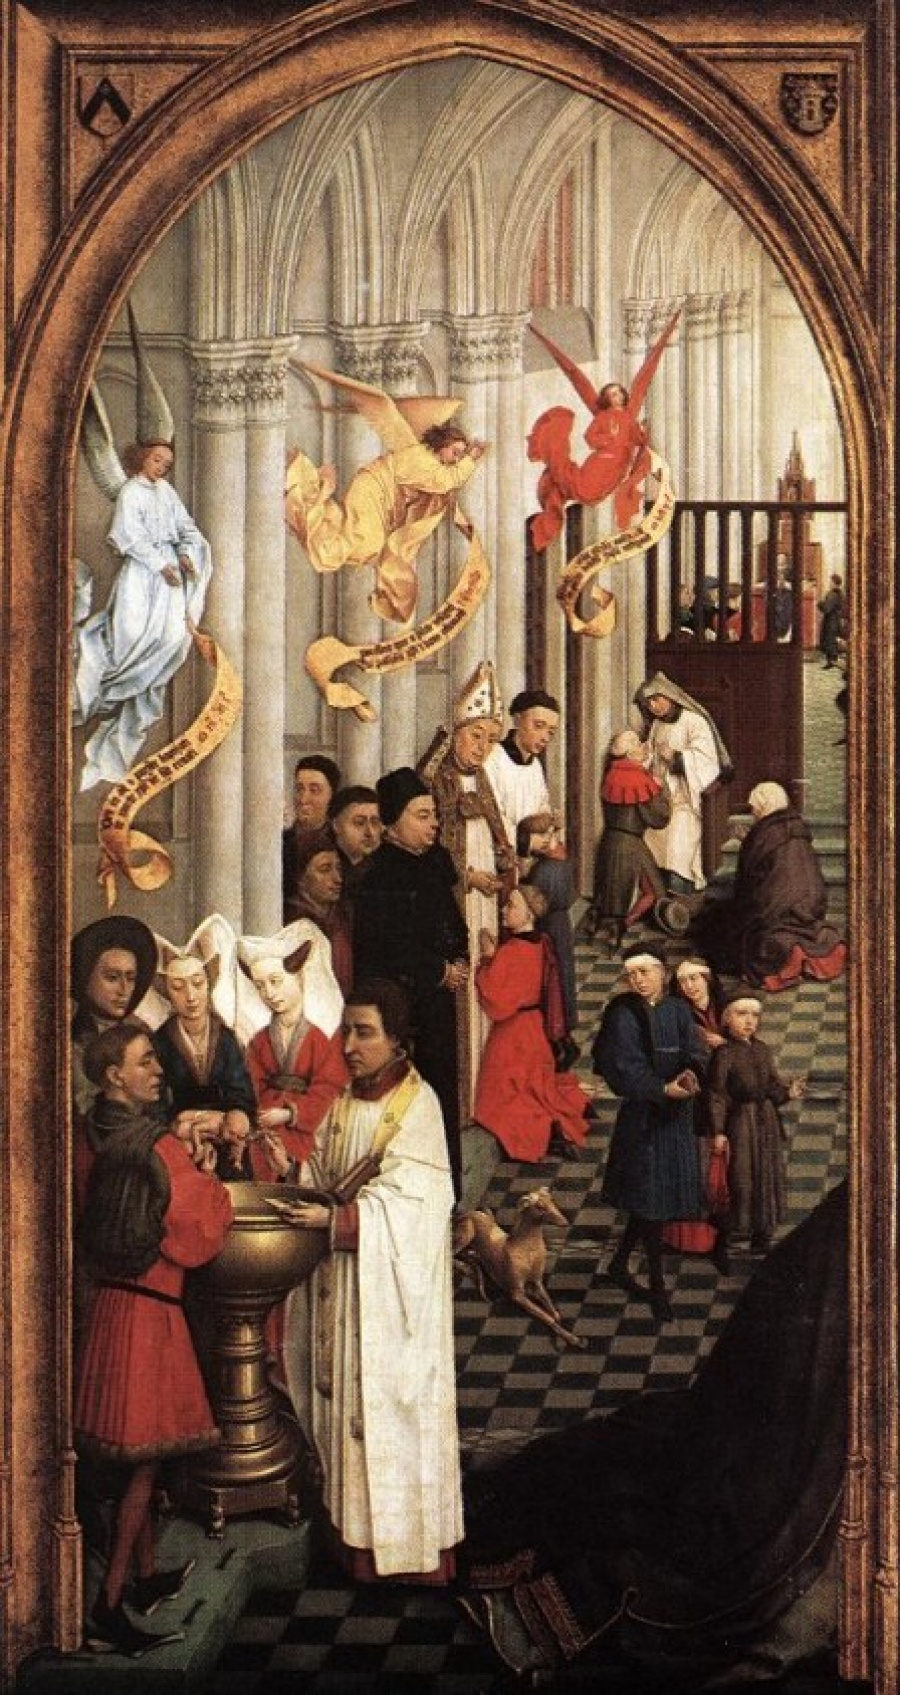 Rogier van der Weyden. The seven sacraments. Fragment